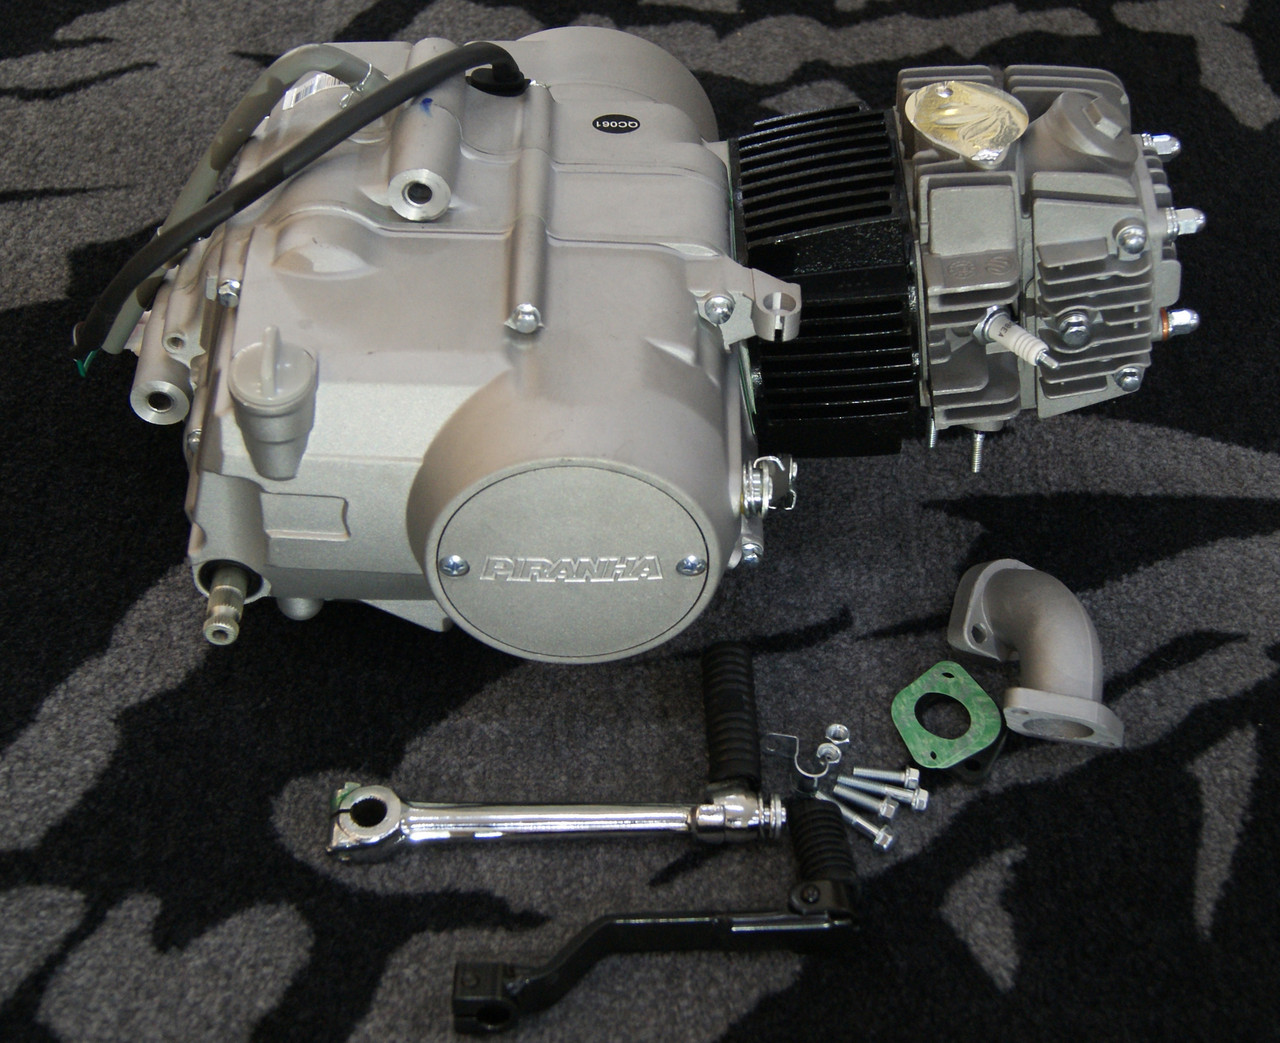 125cc PIRANHA ENGINE - Front Clutch Model